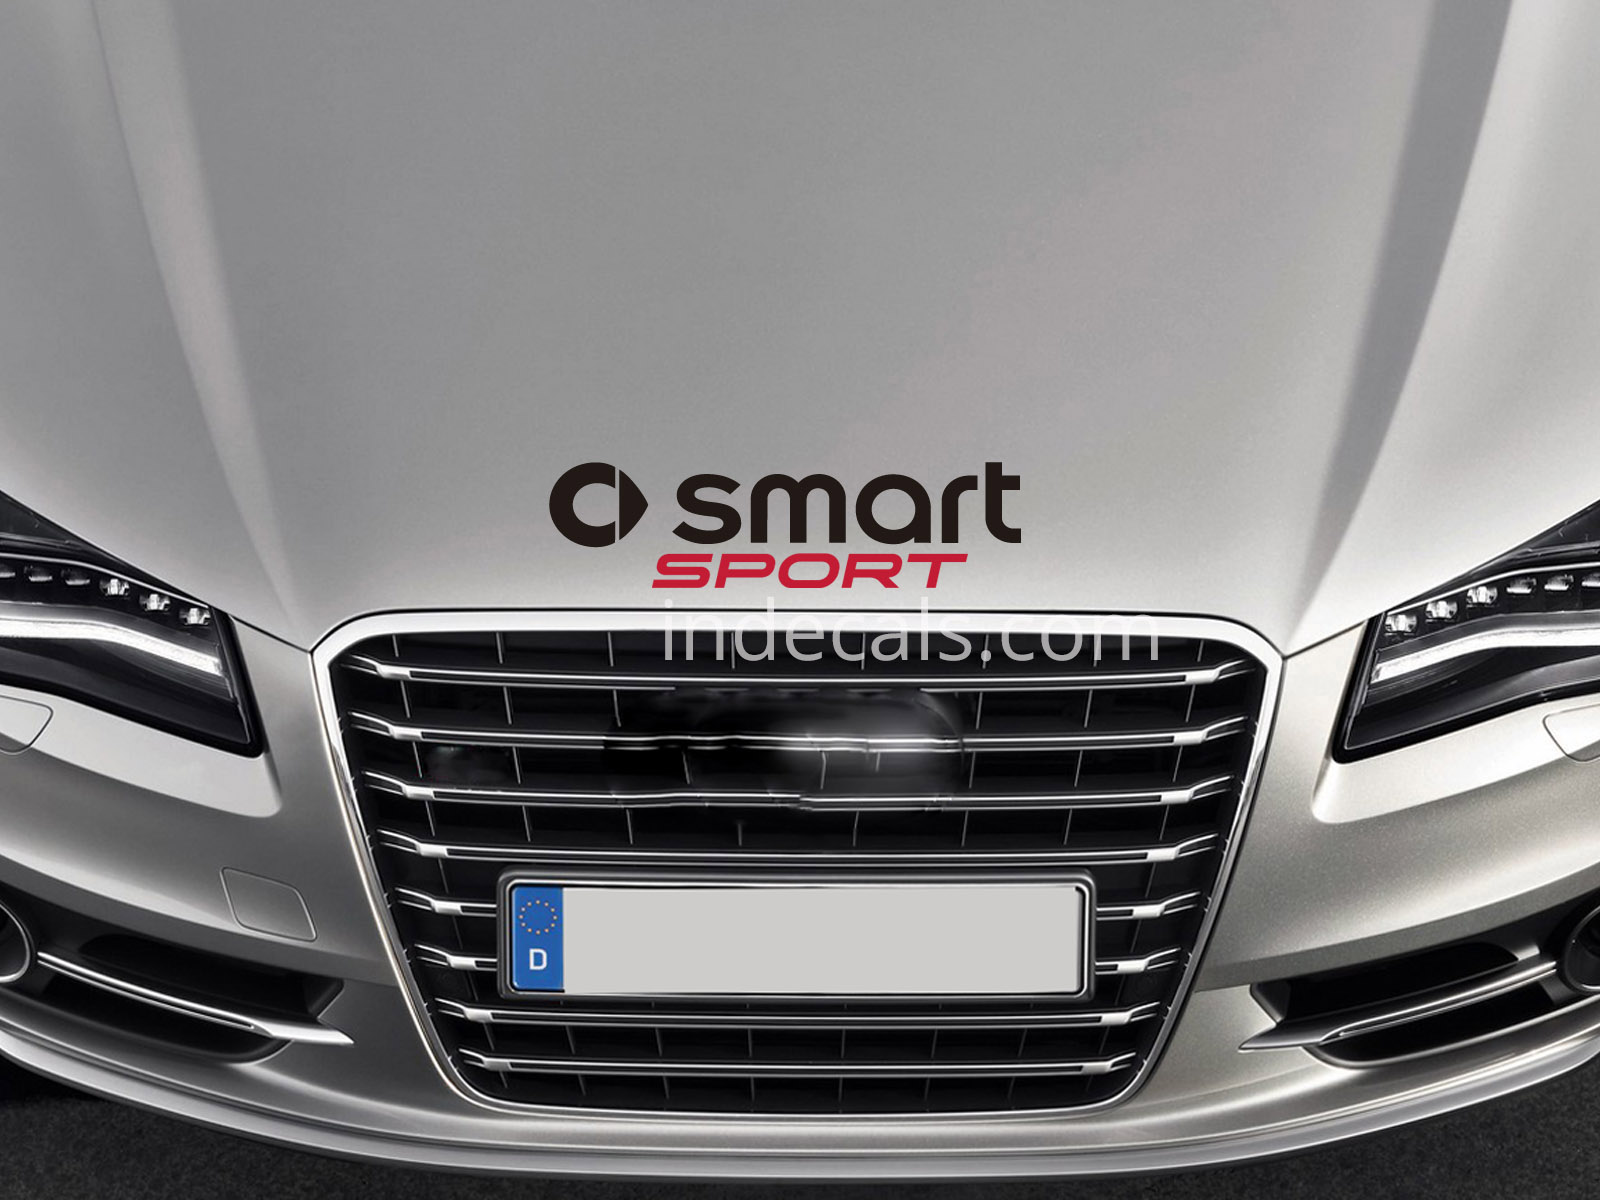 1 x Smart Sport Sticker for Bonnet - Black & Red